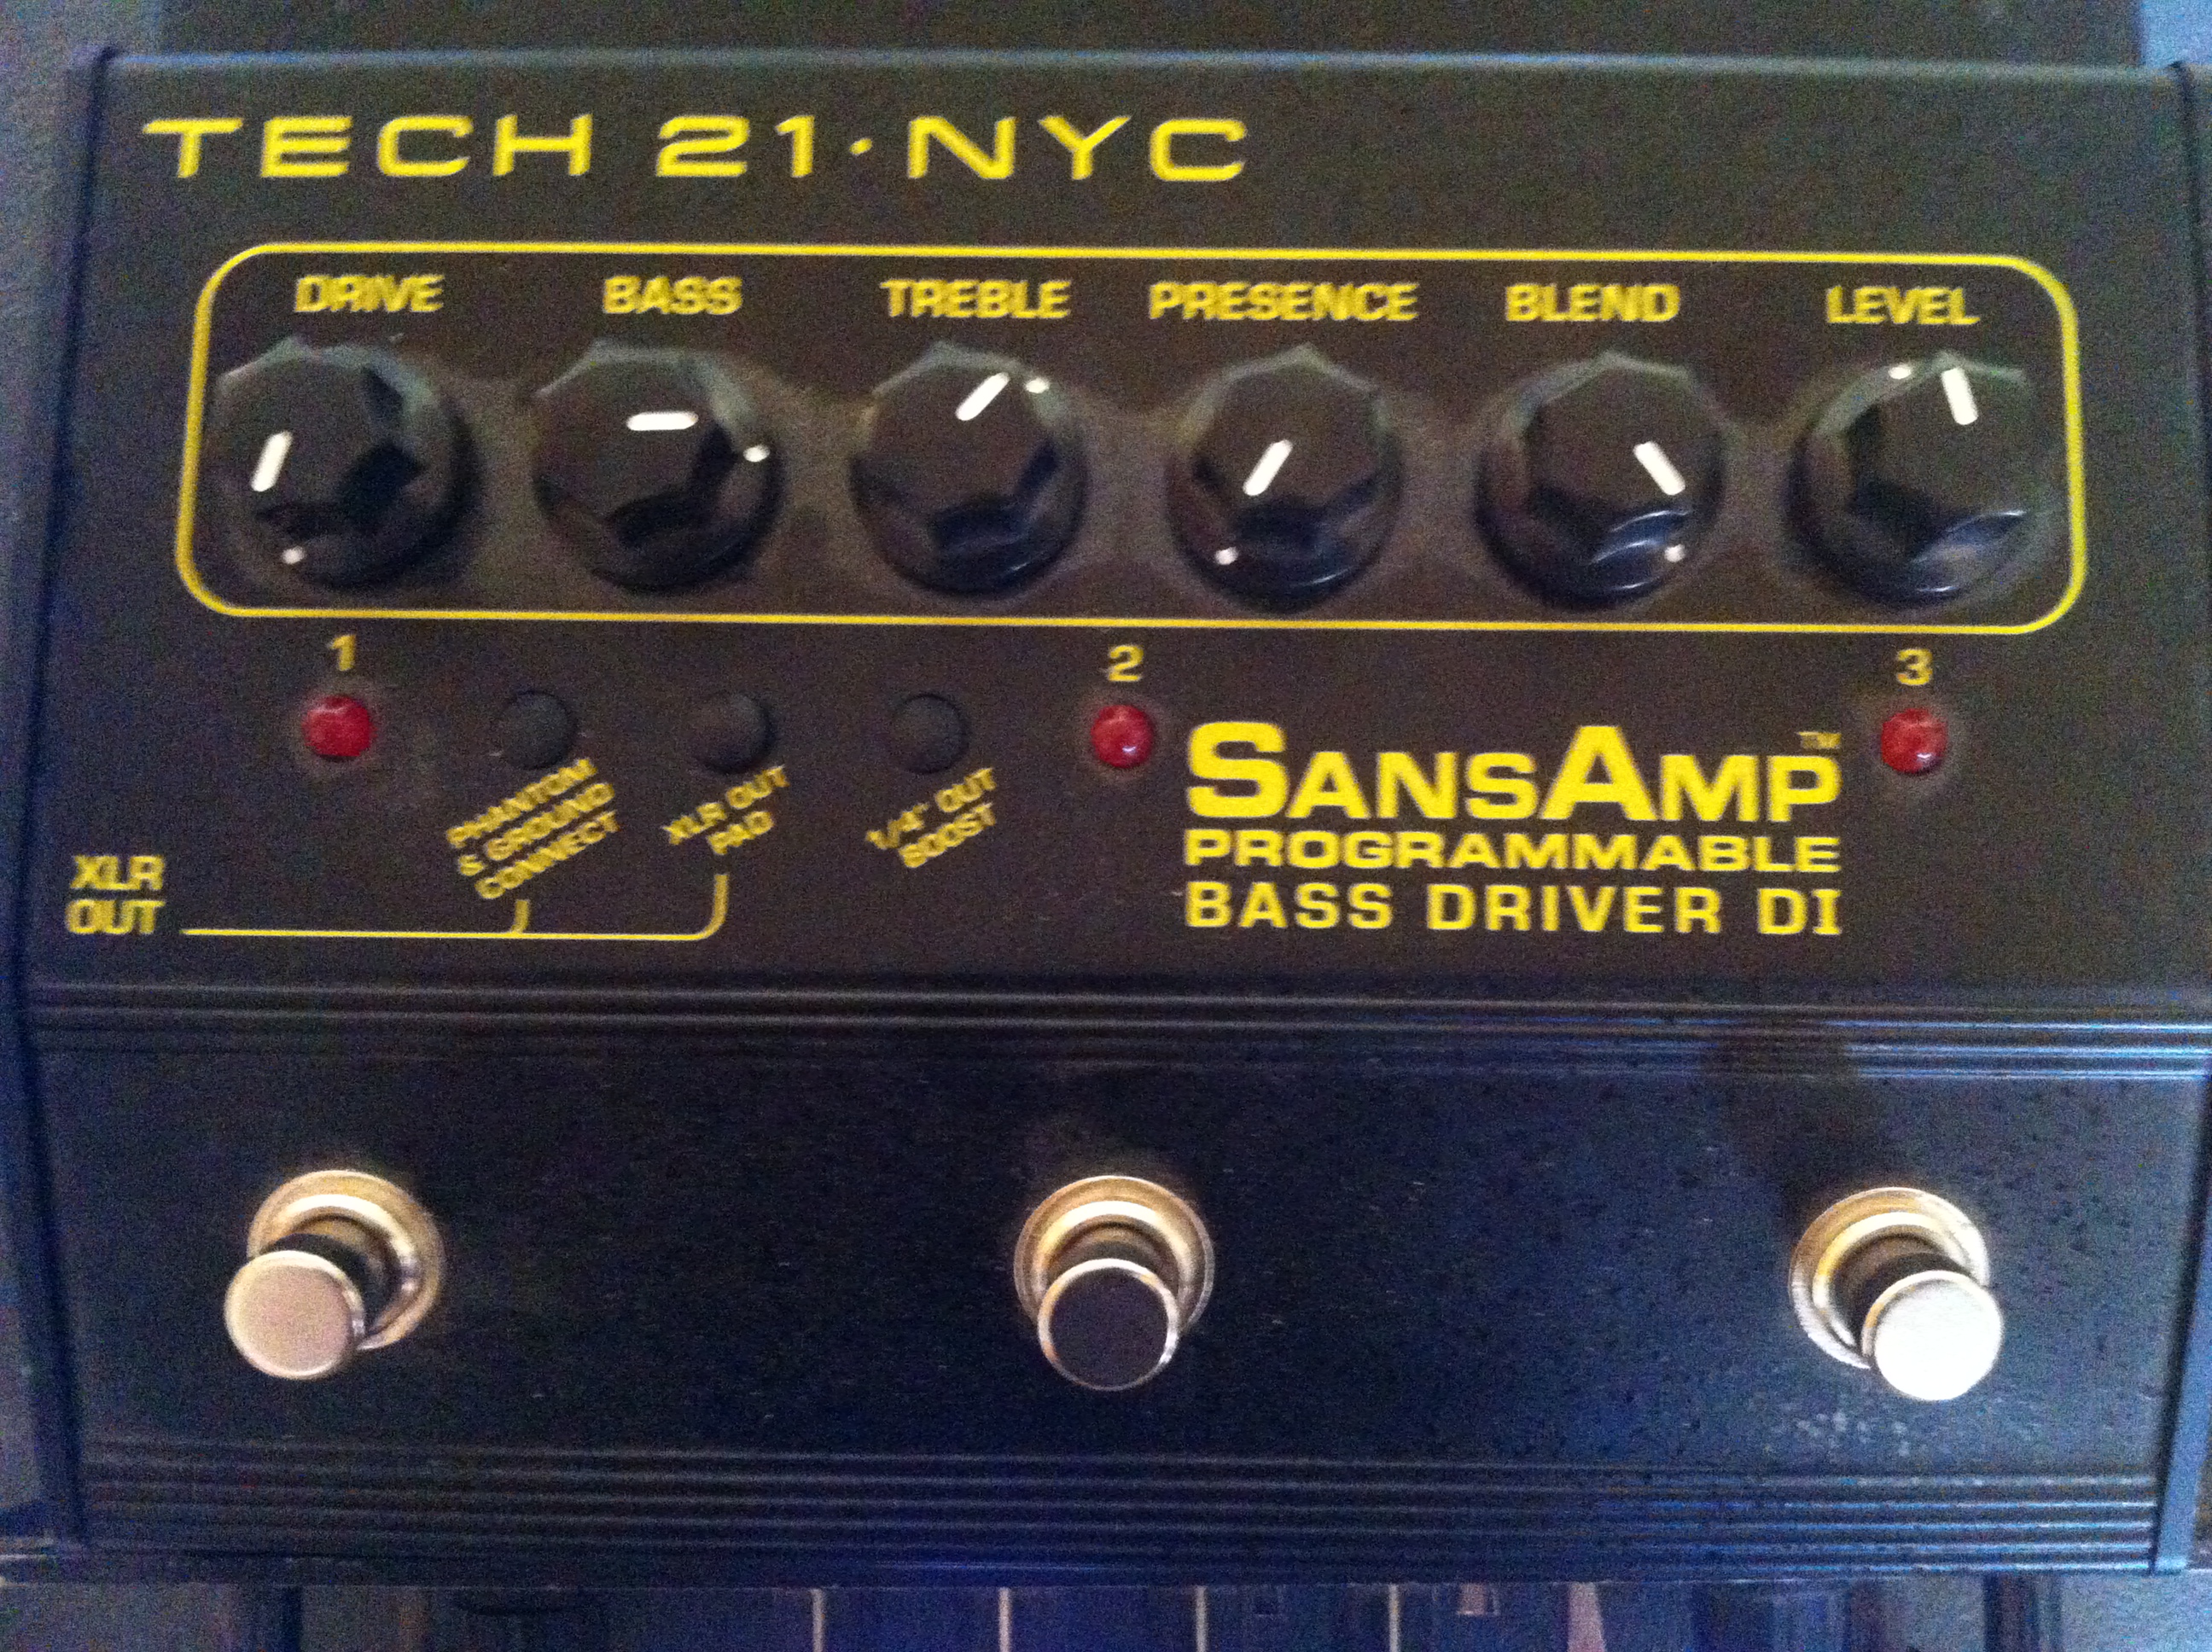 Tech 21 SansAmp Bass Driver DI Programmable image (#397536) - Audiofanzine